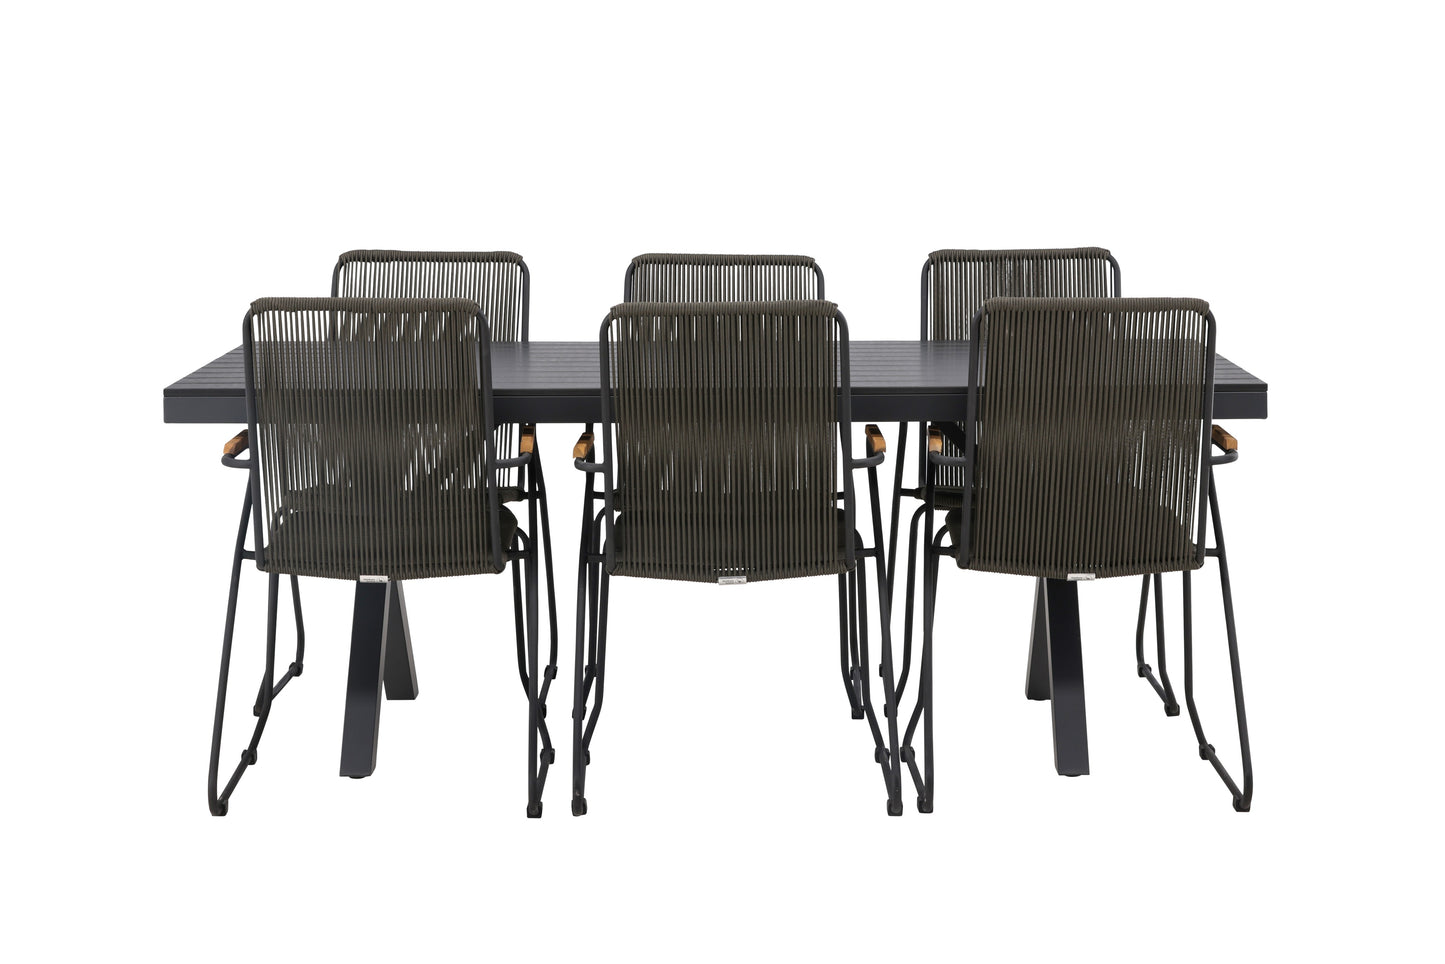 Garcia - Spisebord, Aluminium - Sort / Rektangulær 100*200* + Bois stol Stål - Sort / Mørkegråt Reb